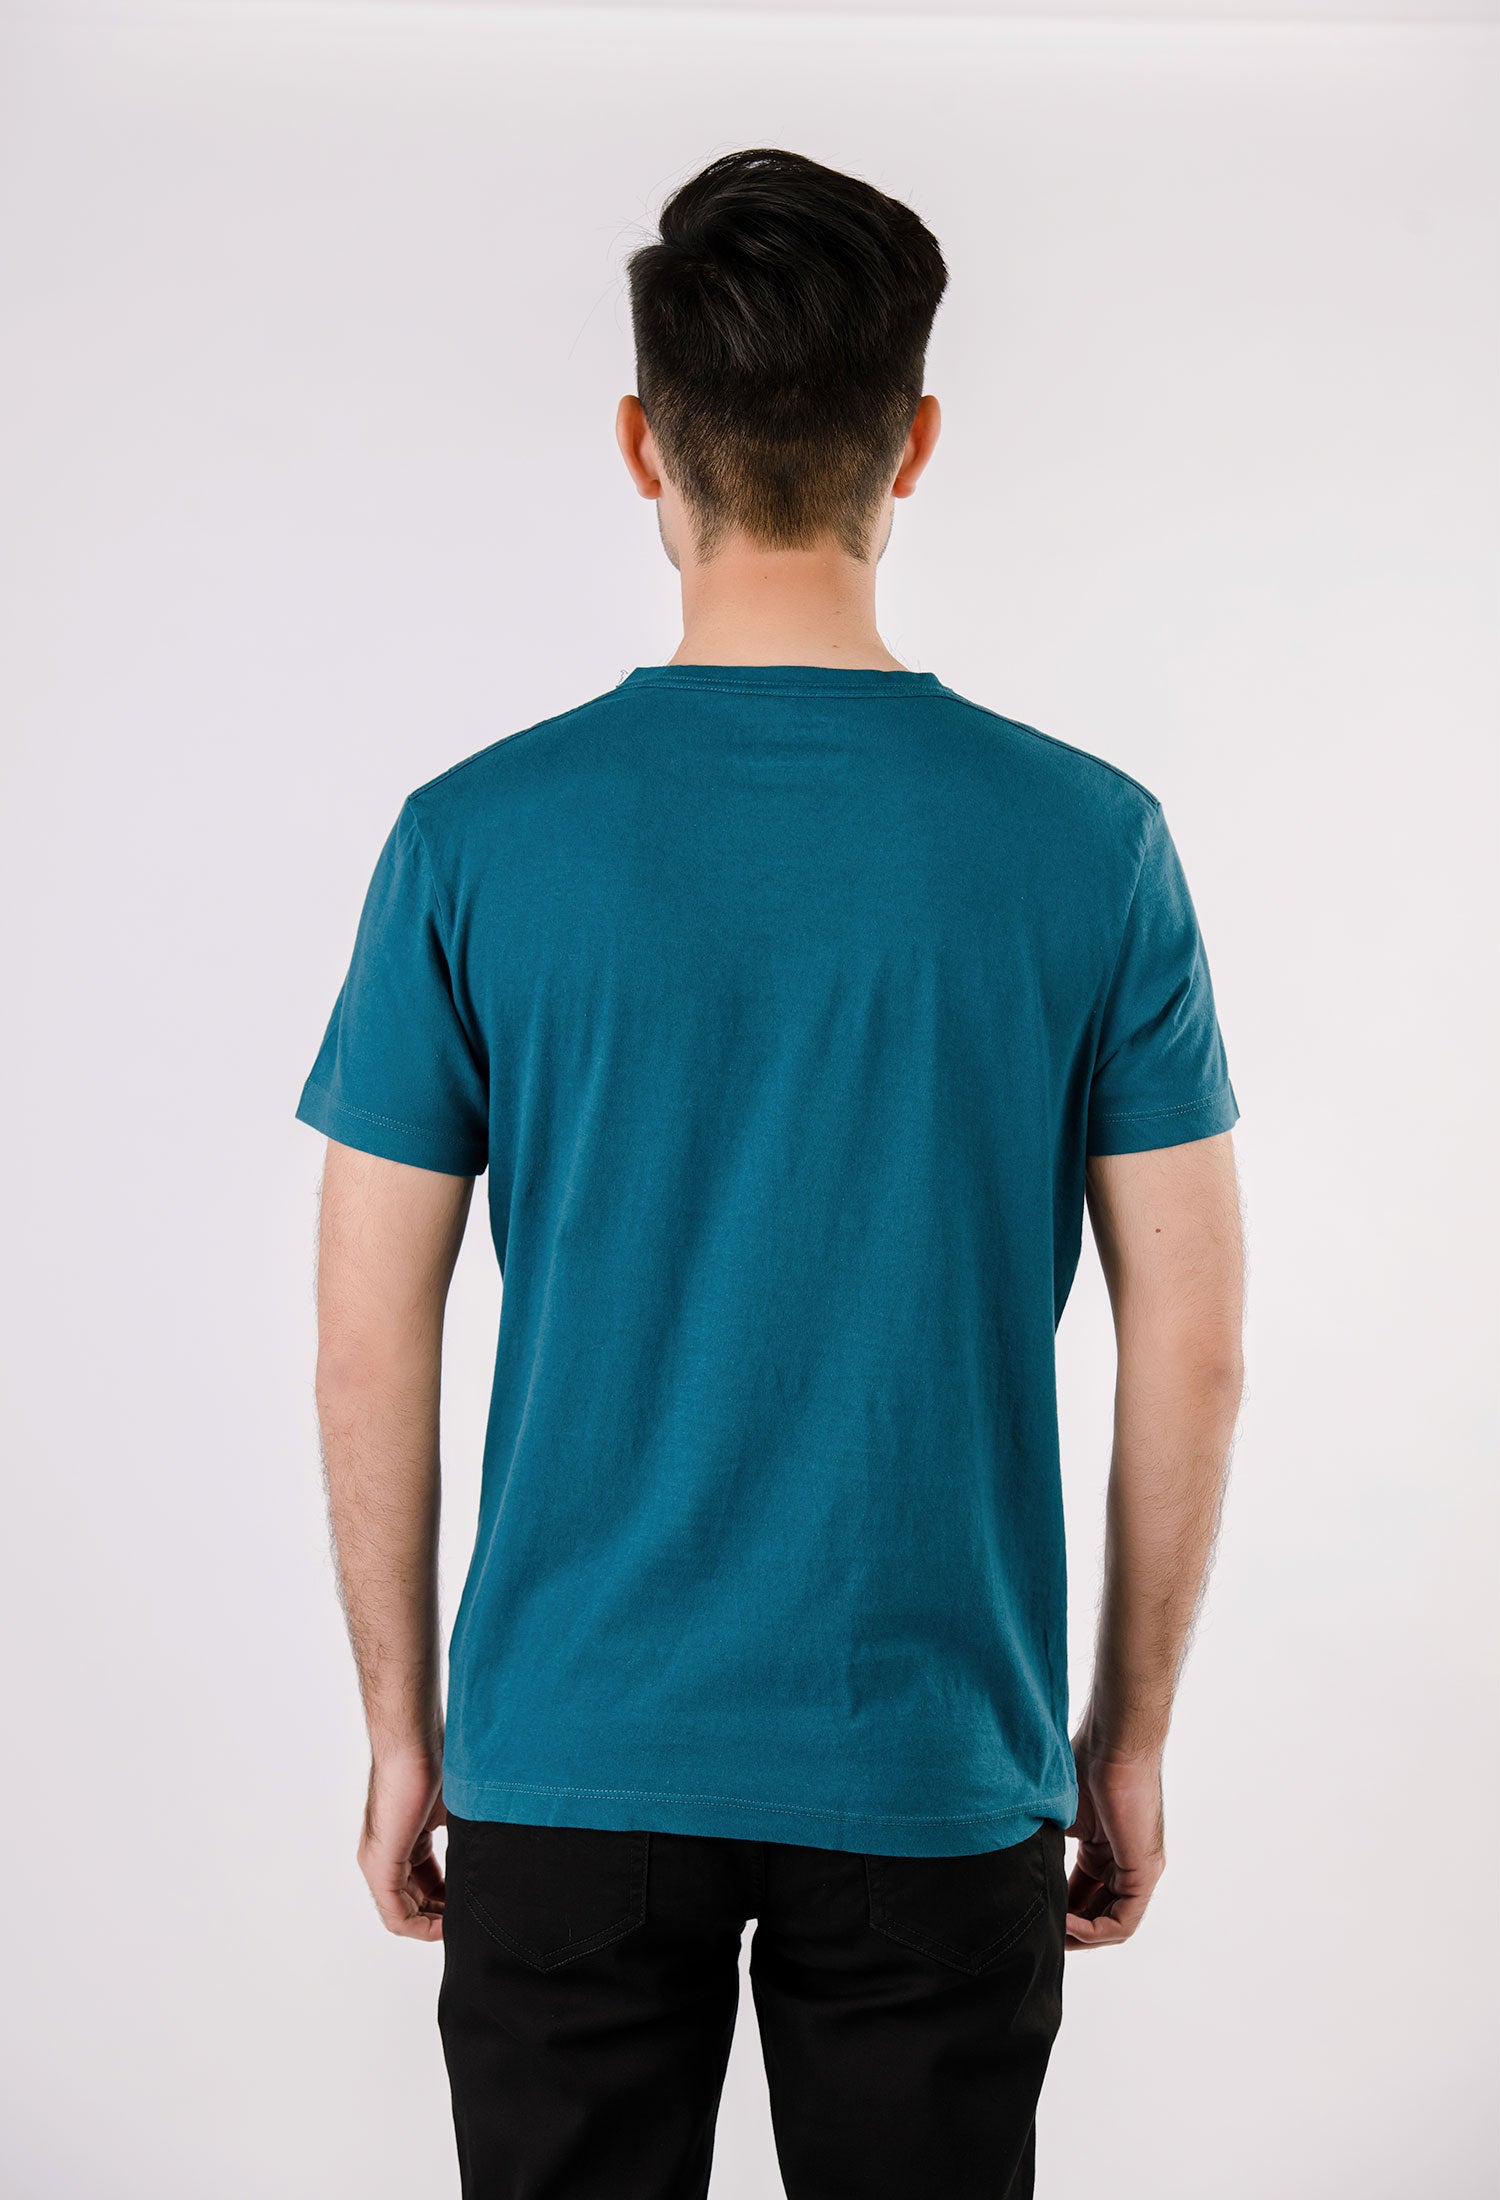 Teal Blue Basic T-Shirt